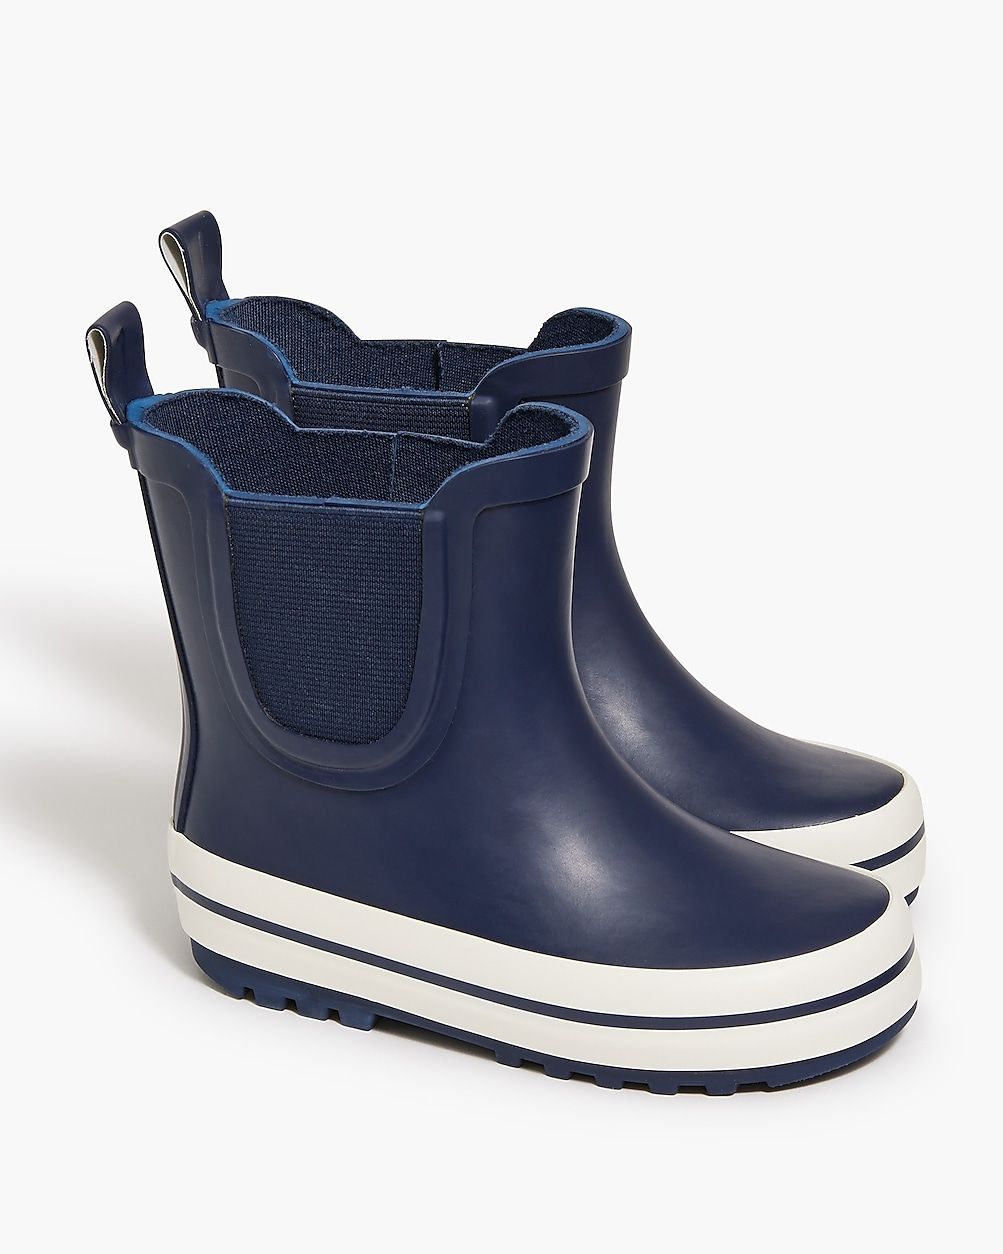 Kids' rain boots | J.Crew Factory